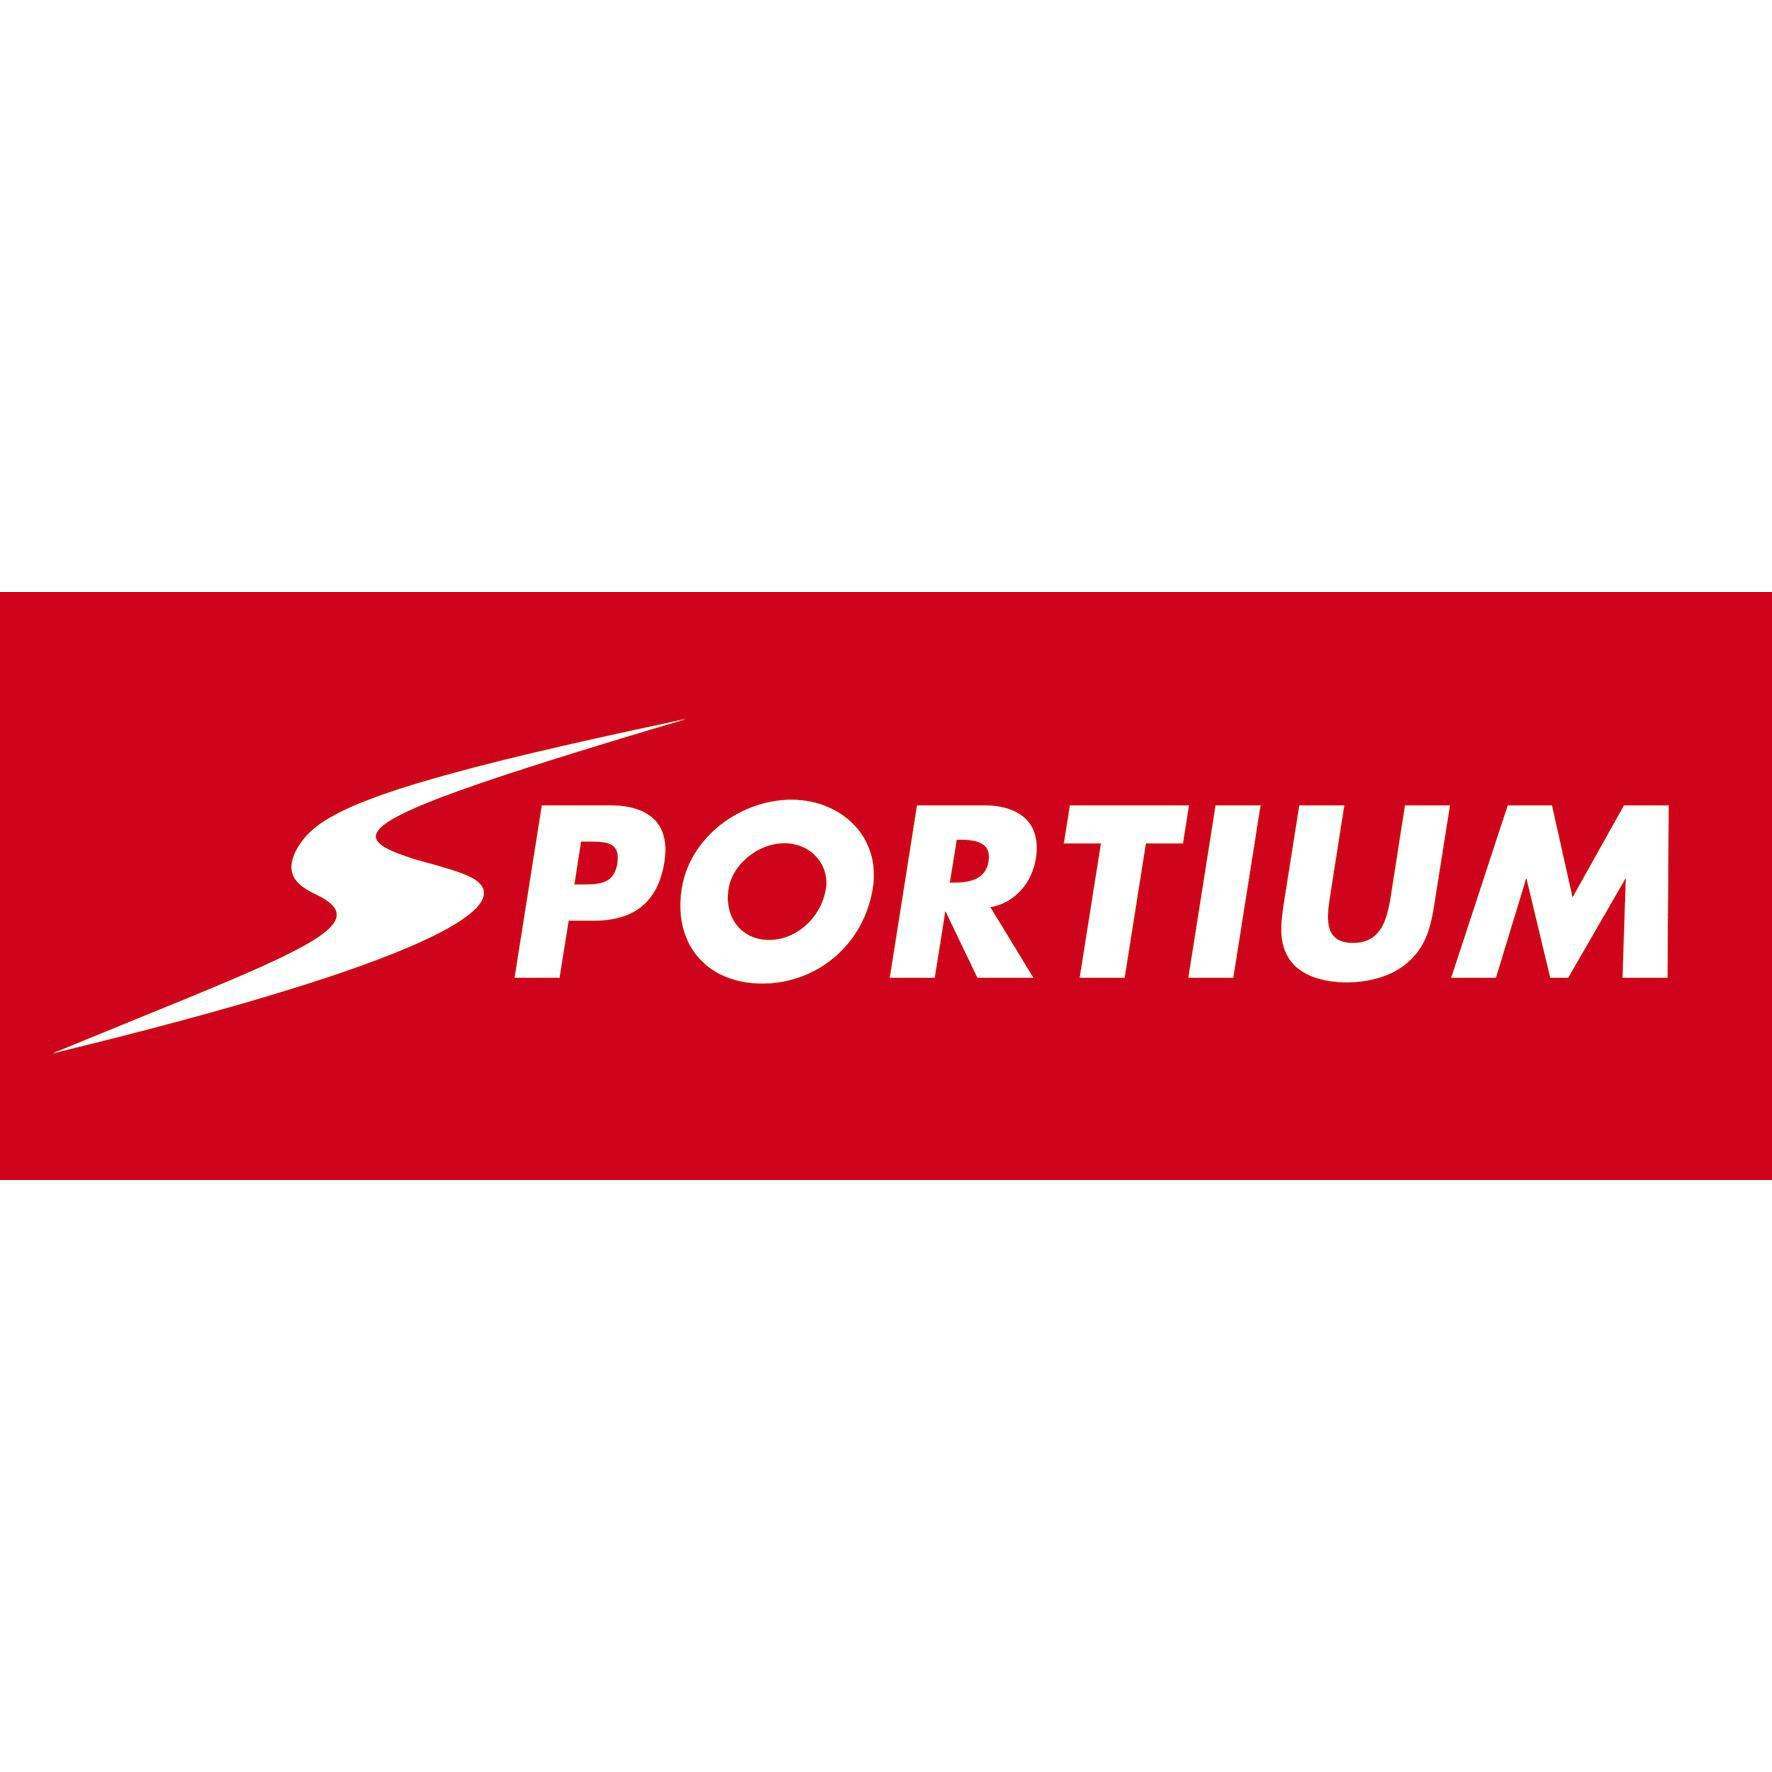 Sportium En Salon Tordera 900447744